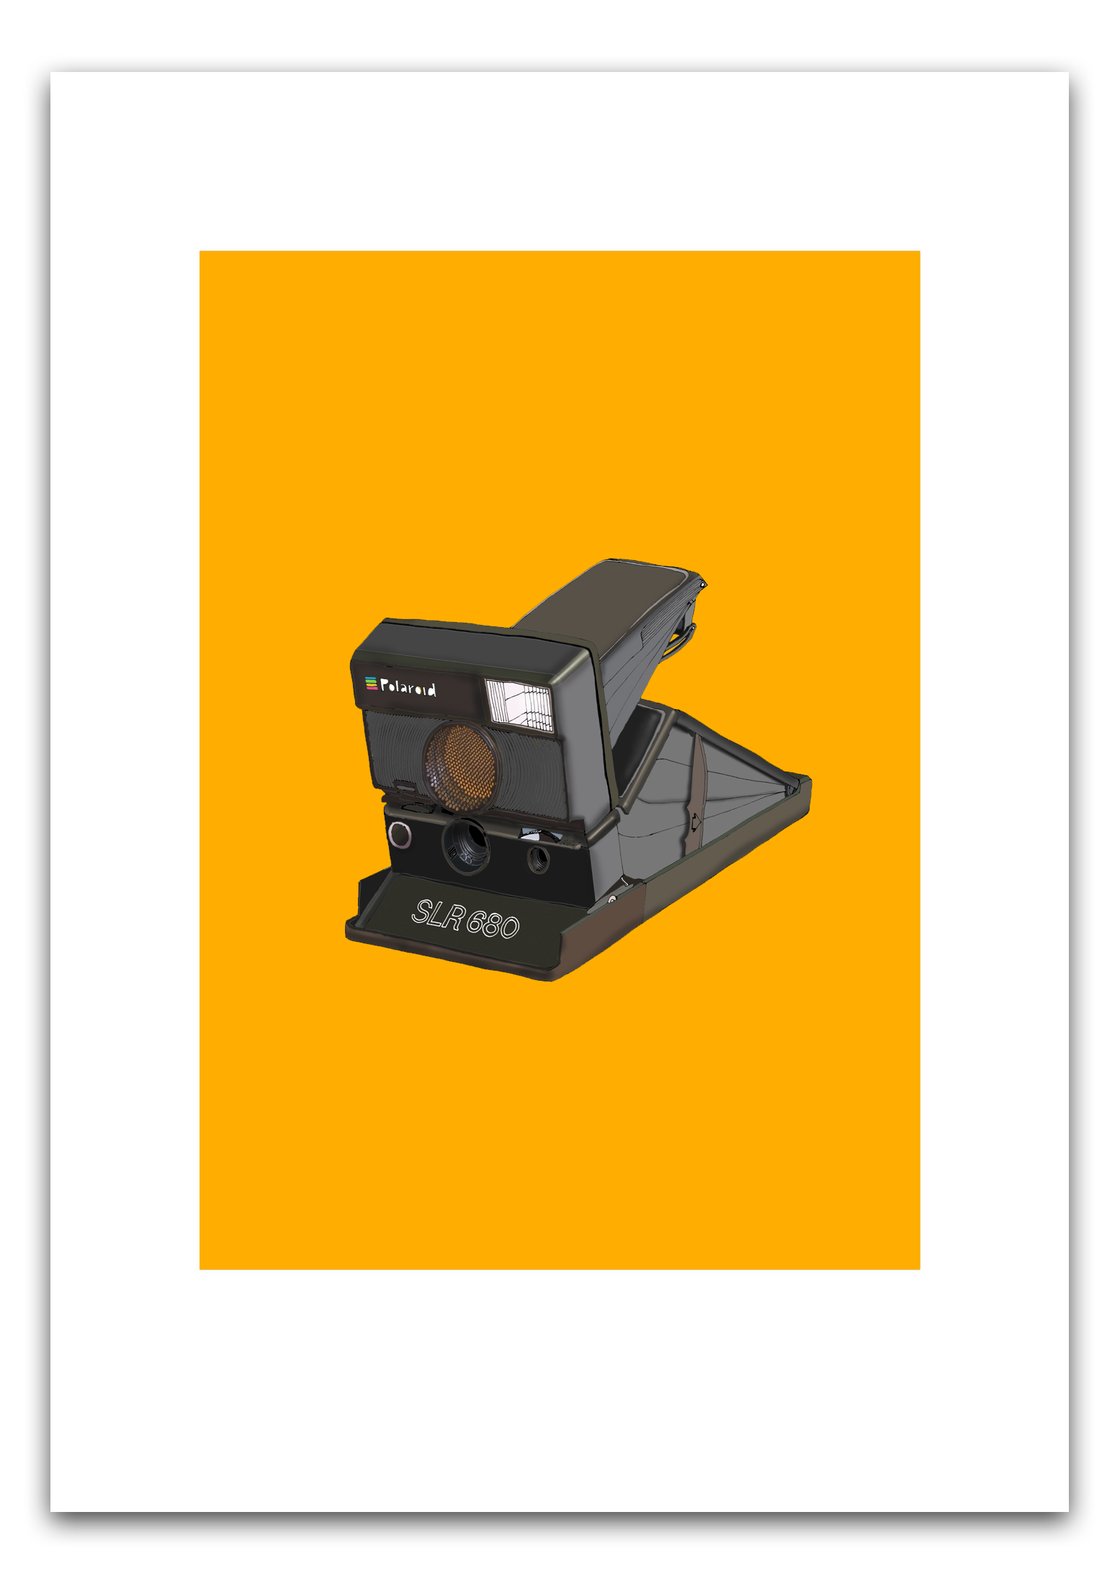 Image of Polaroid SLR-680